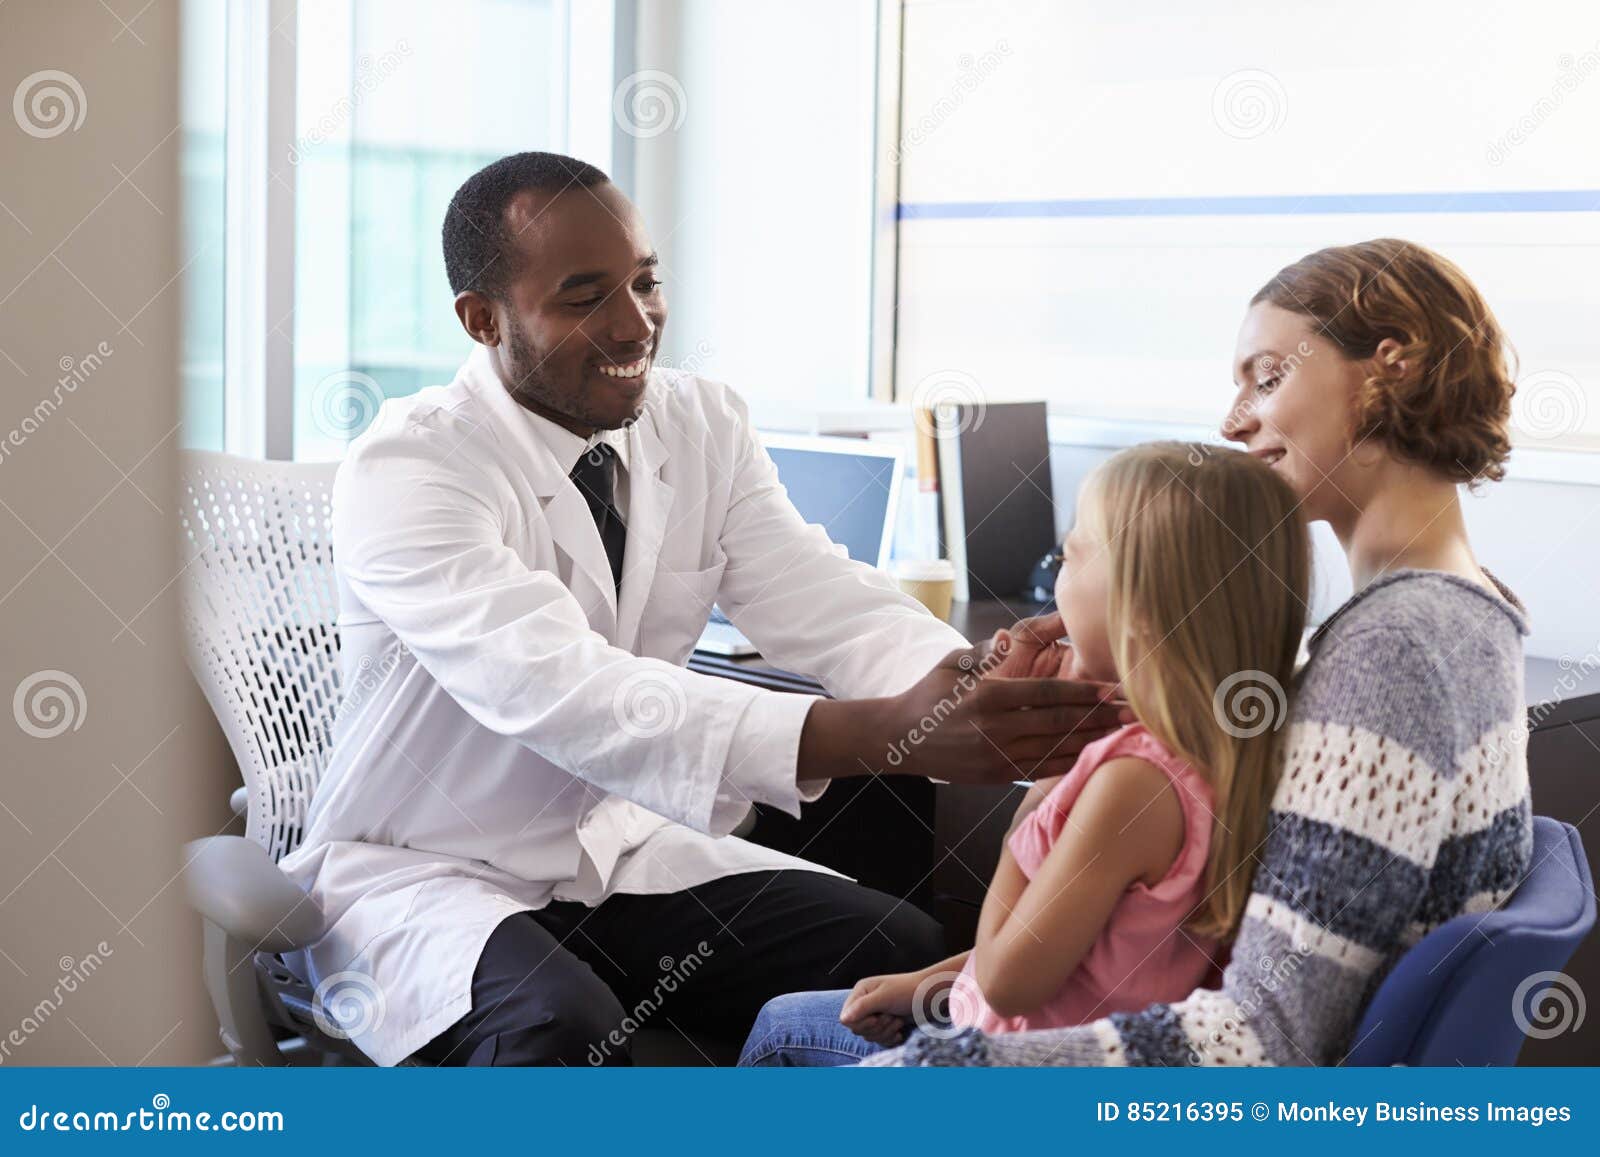 pediatrician examining child in hospital